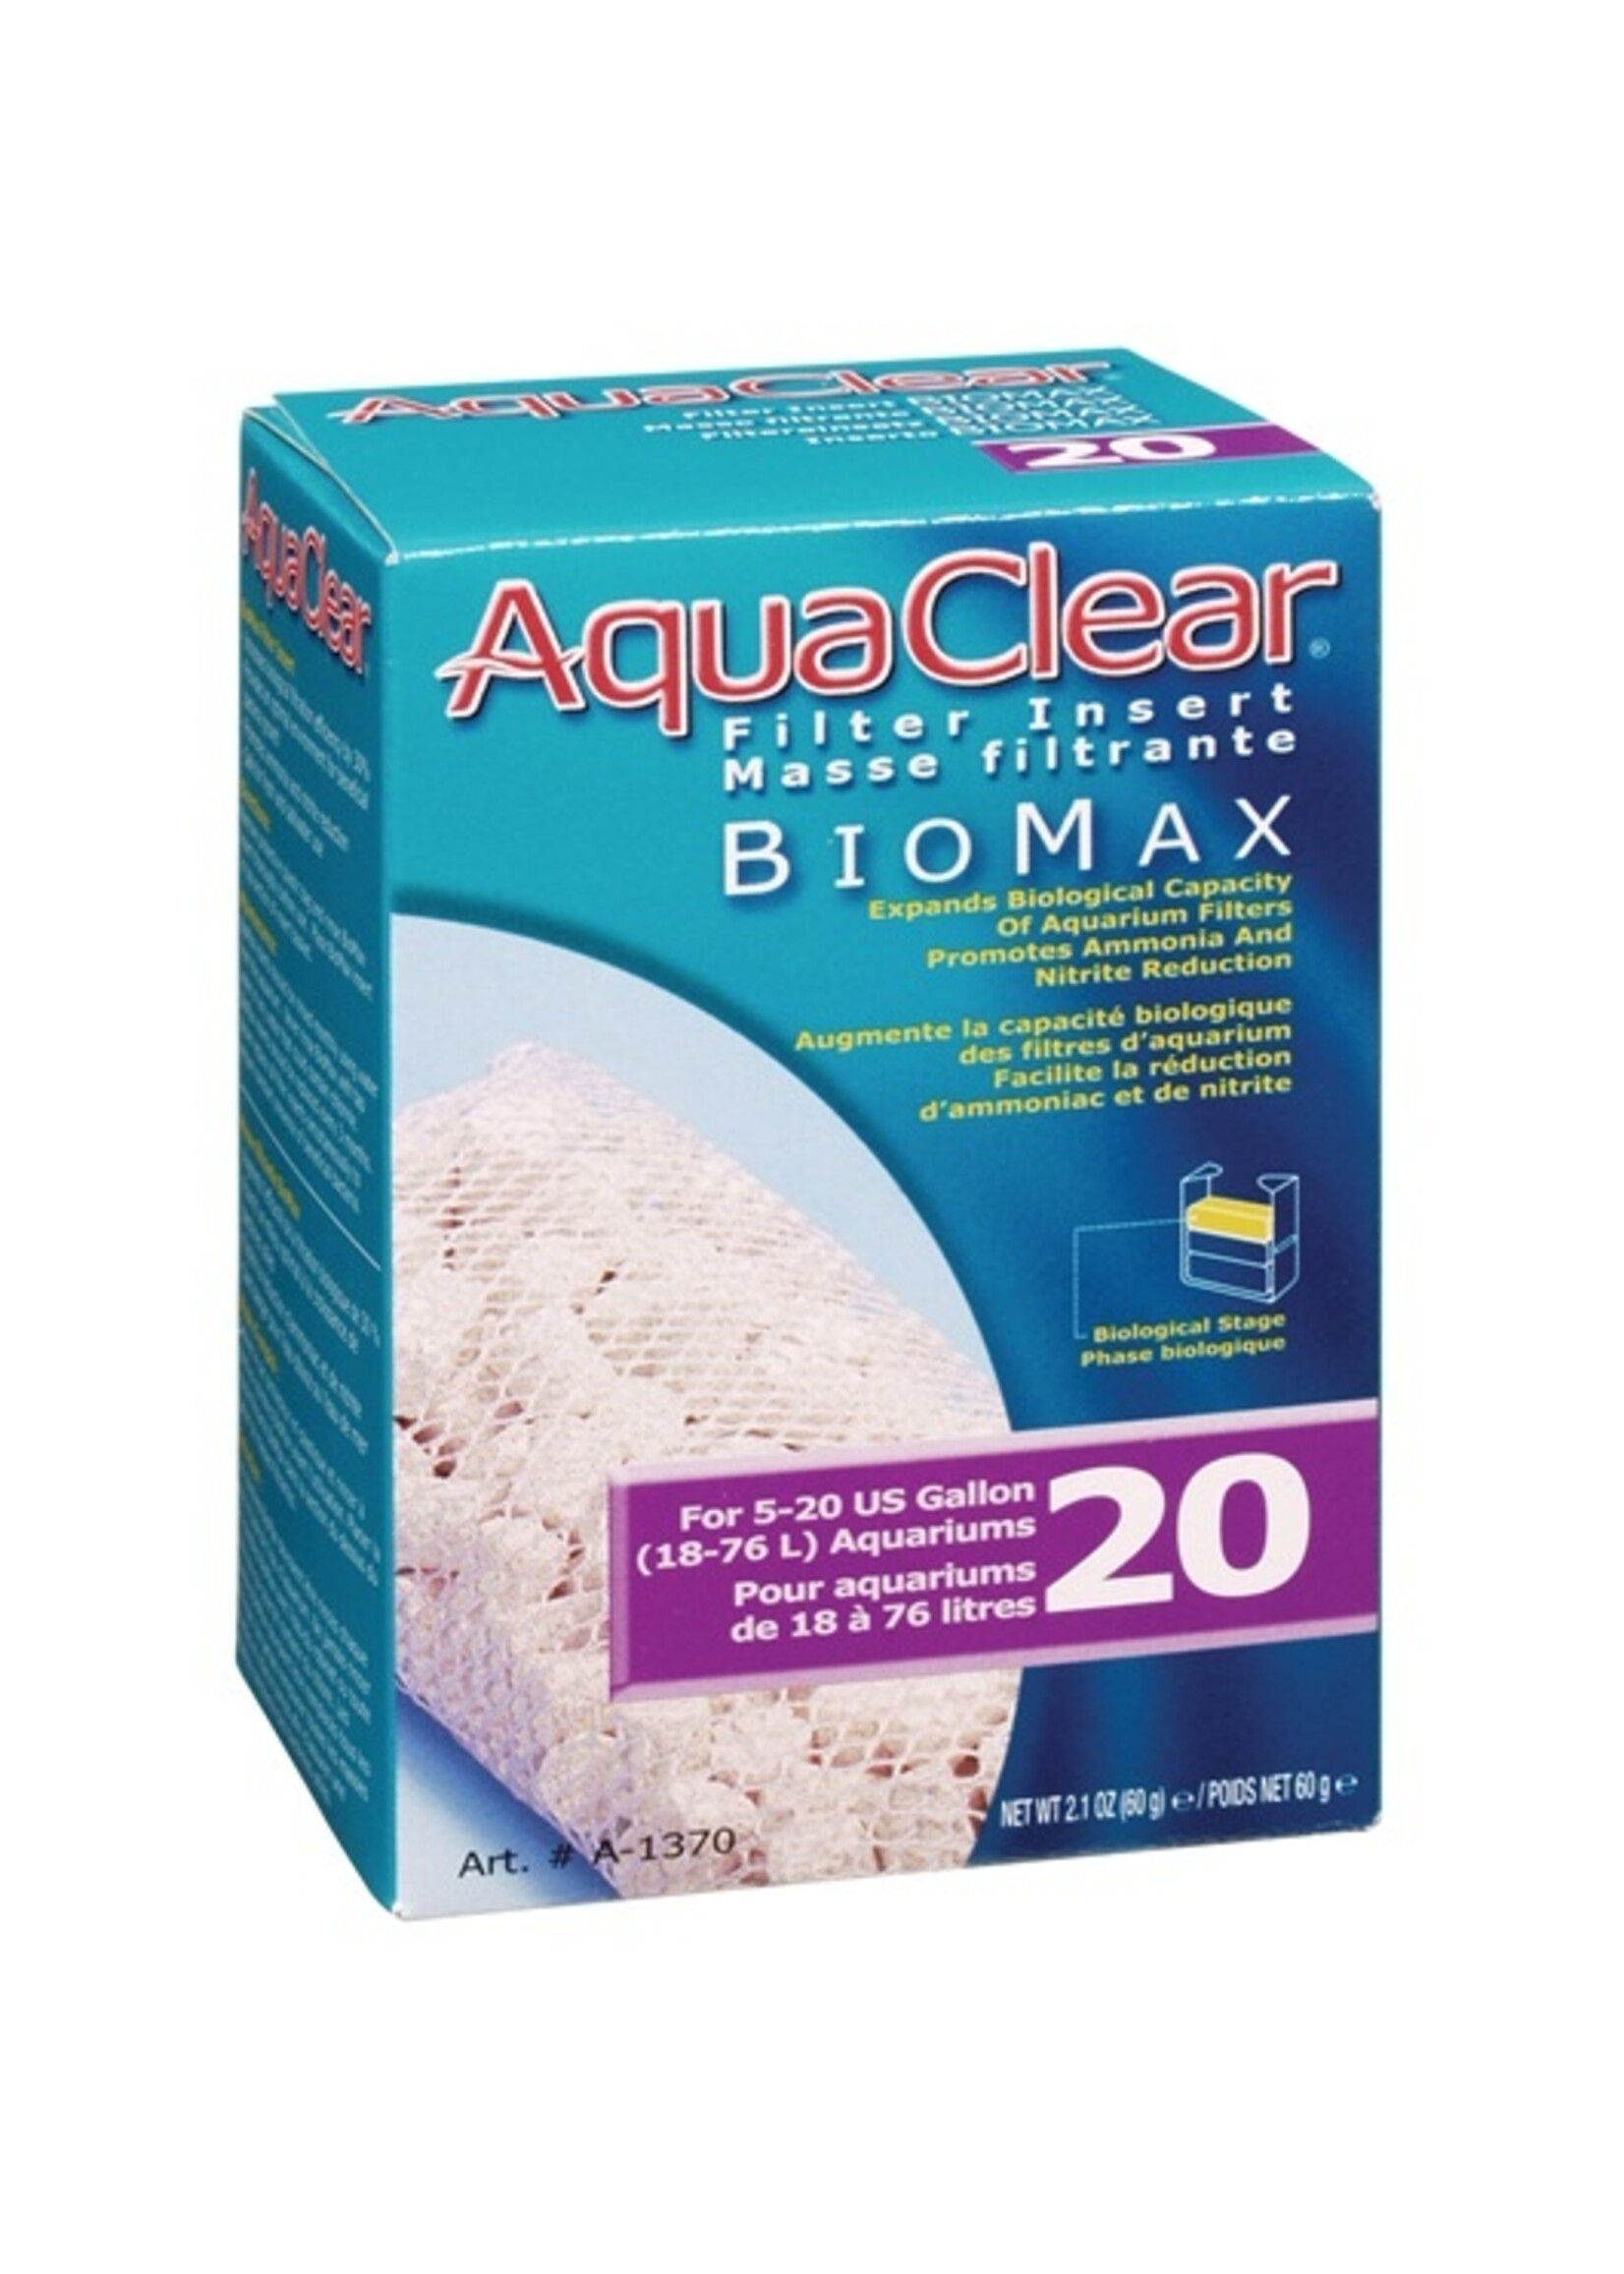 AquaClear AquaClear Bio-Max Insert